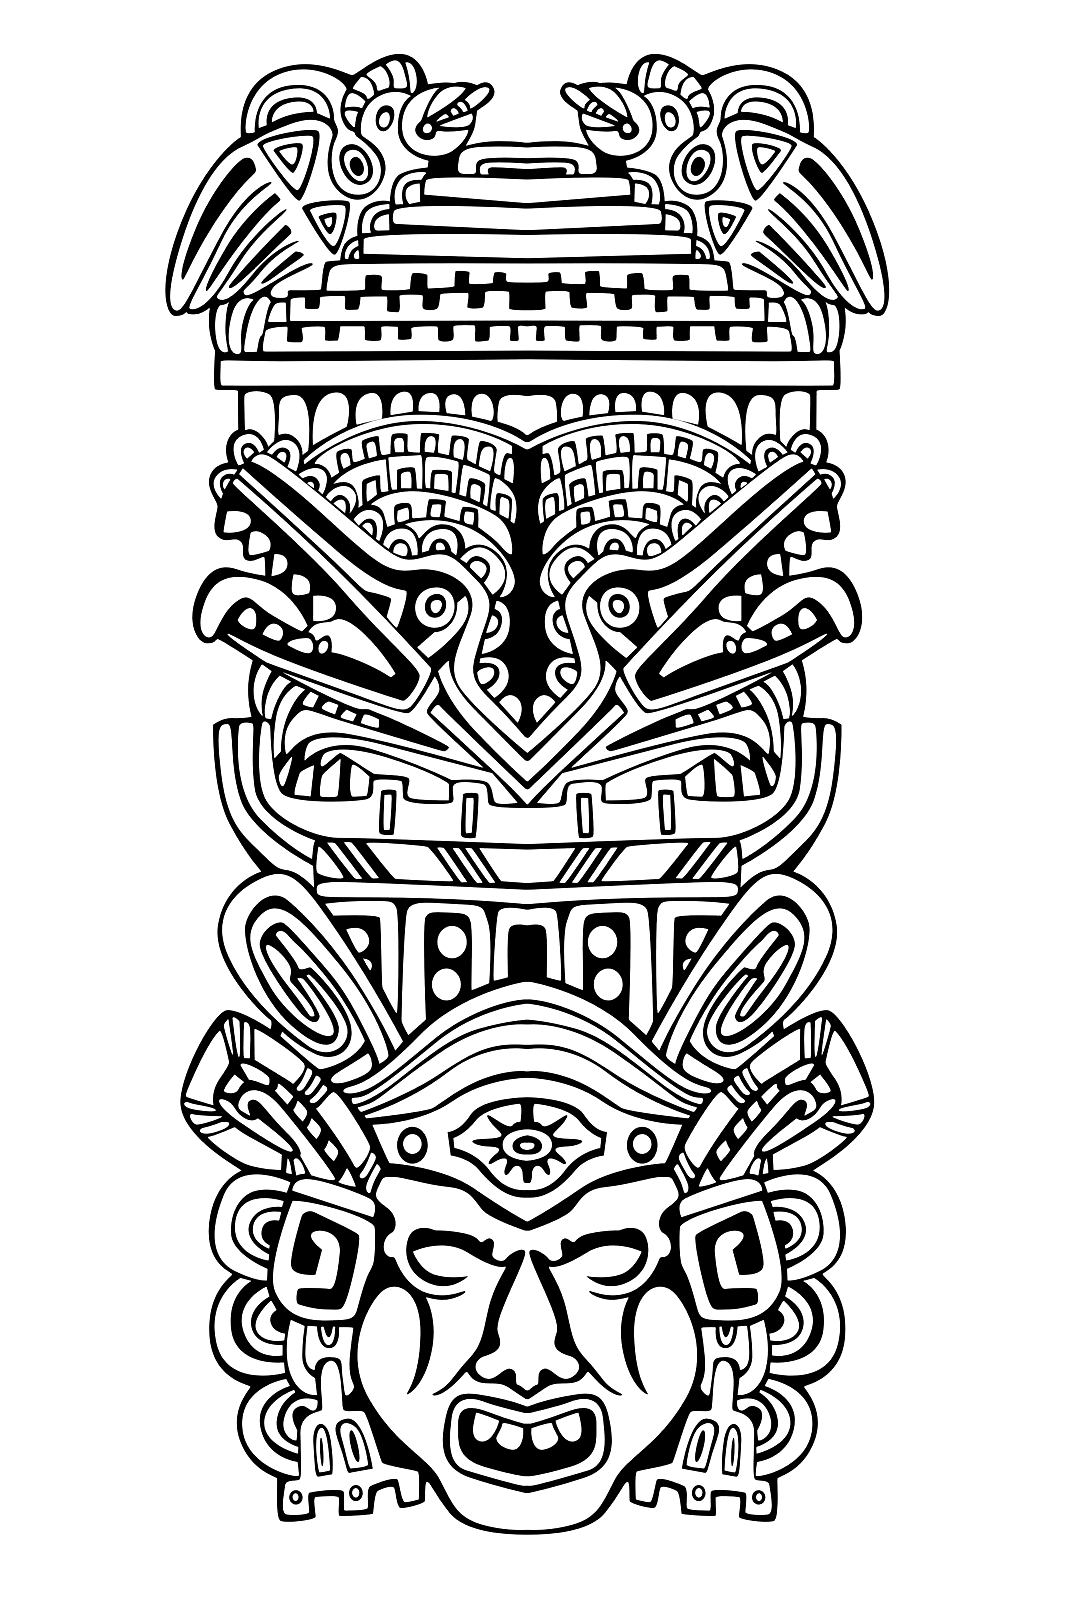 Colorear para adultos : Mayas, Aztecas e Incas - 9, Artista : Rocich   Origen : 123rf